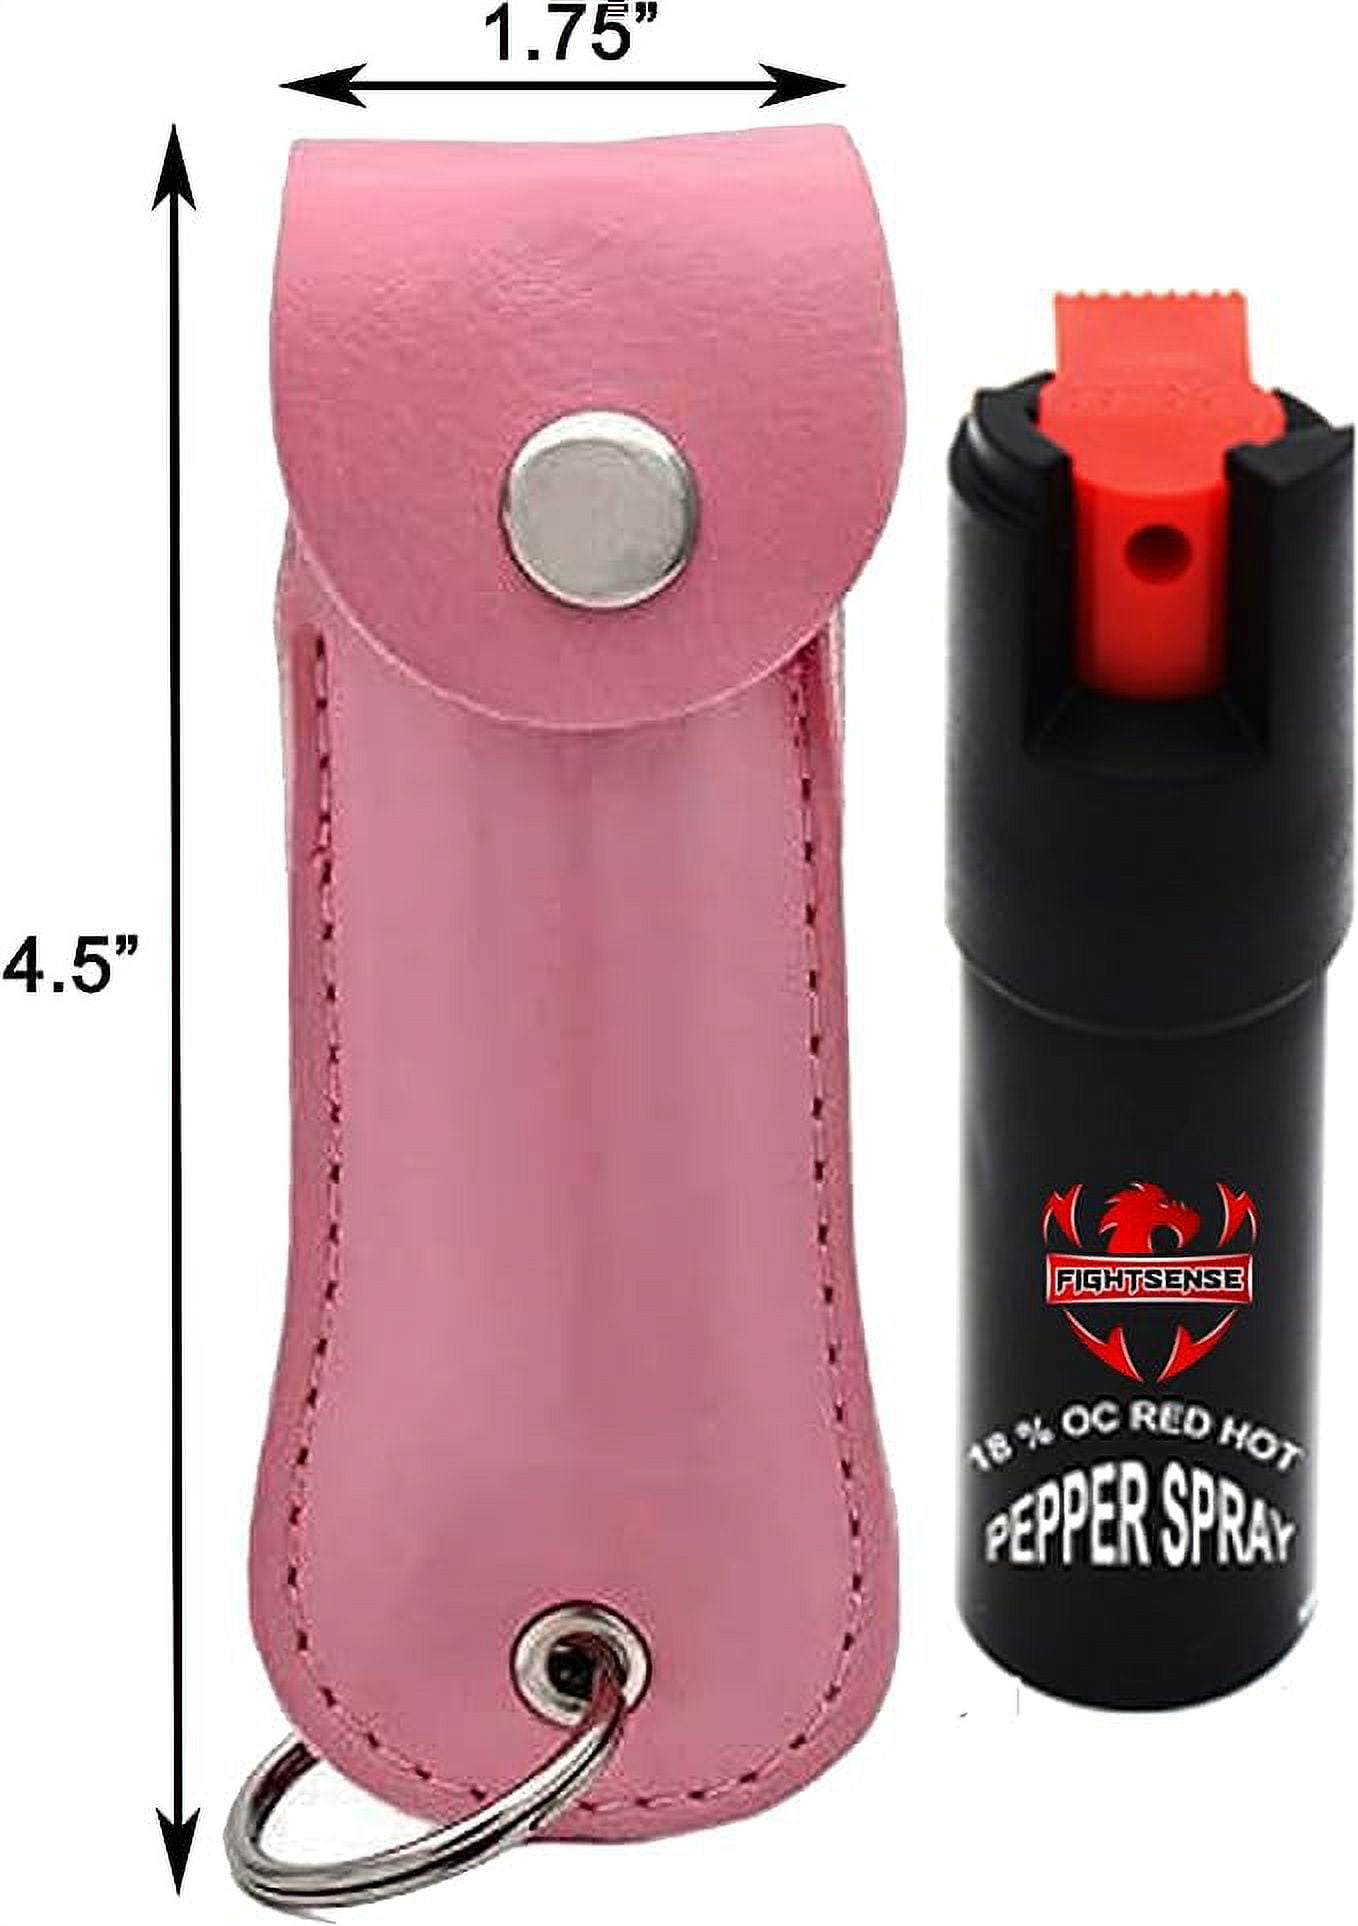 Eliminator Pepper Spray with Twist Lock, 4 oz., 2 Pack - 98339, Pepper  Sprays at Sportsman's Guide